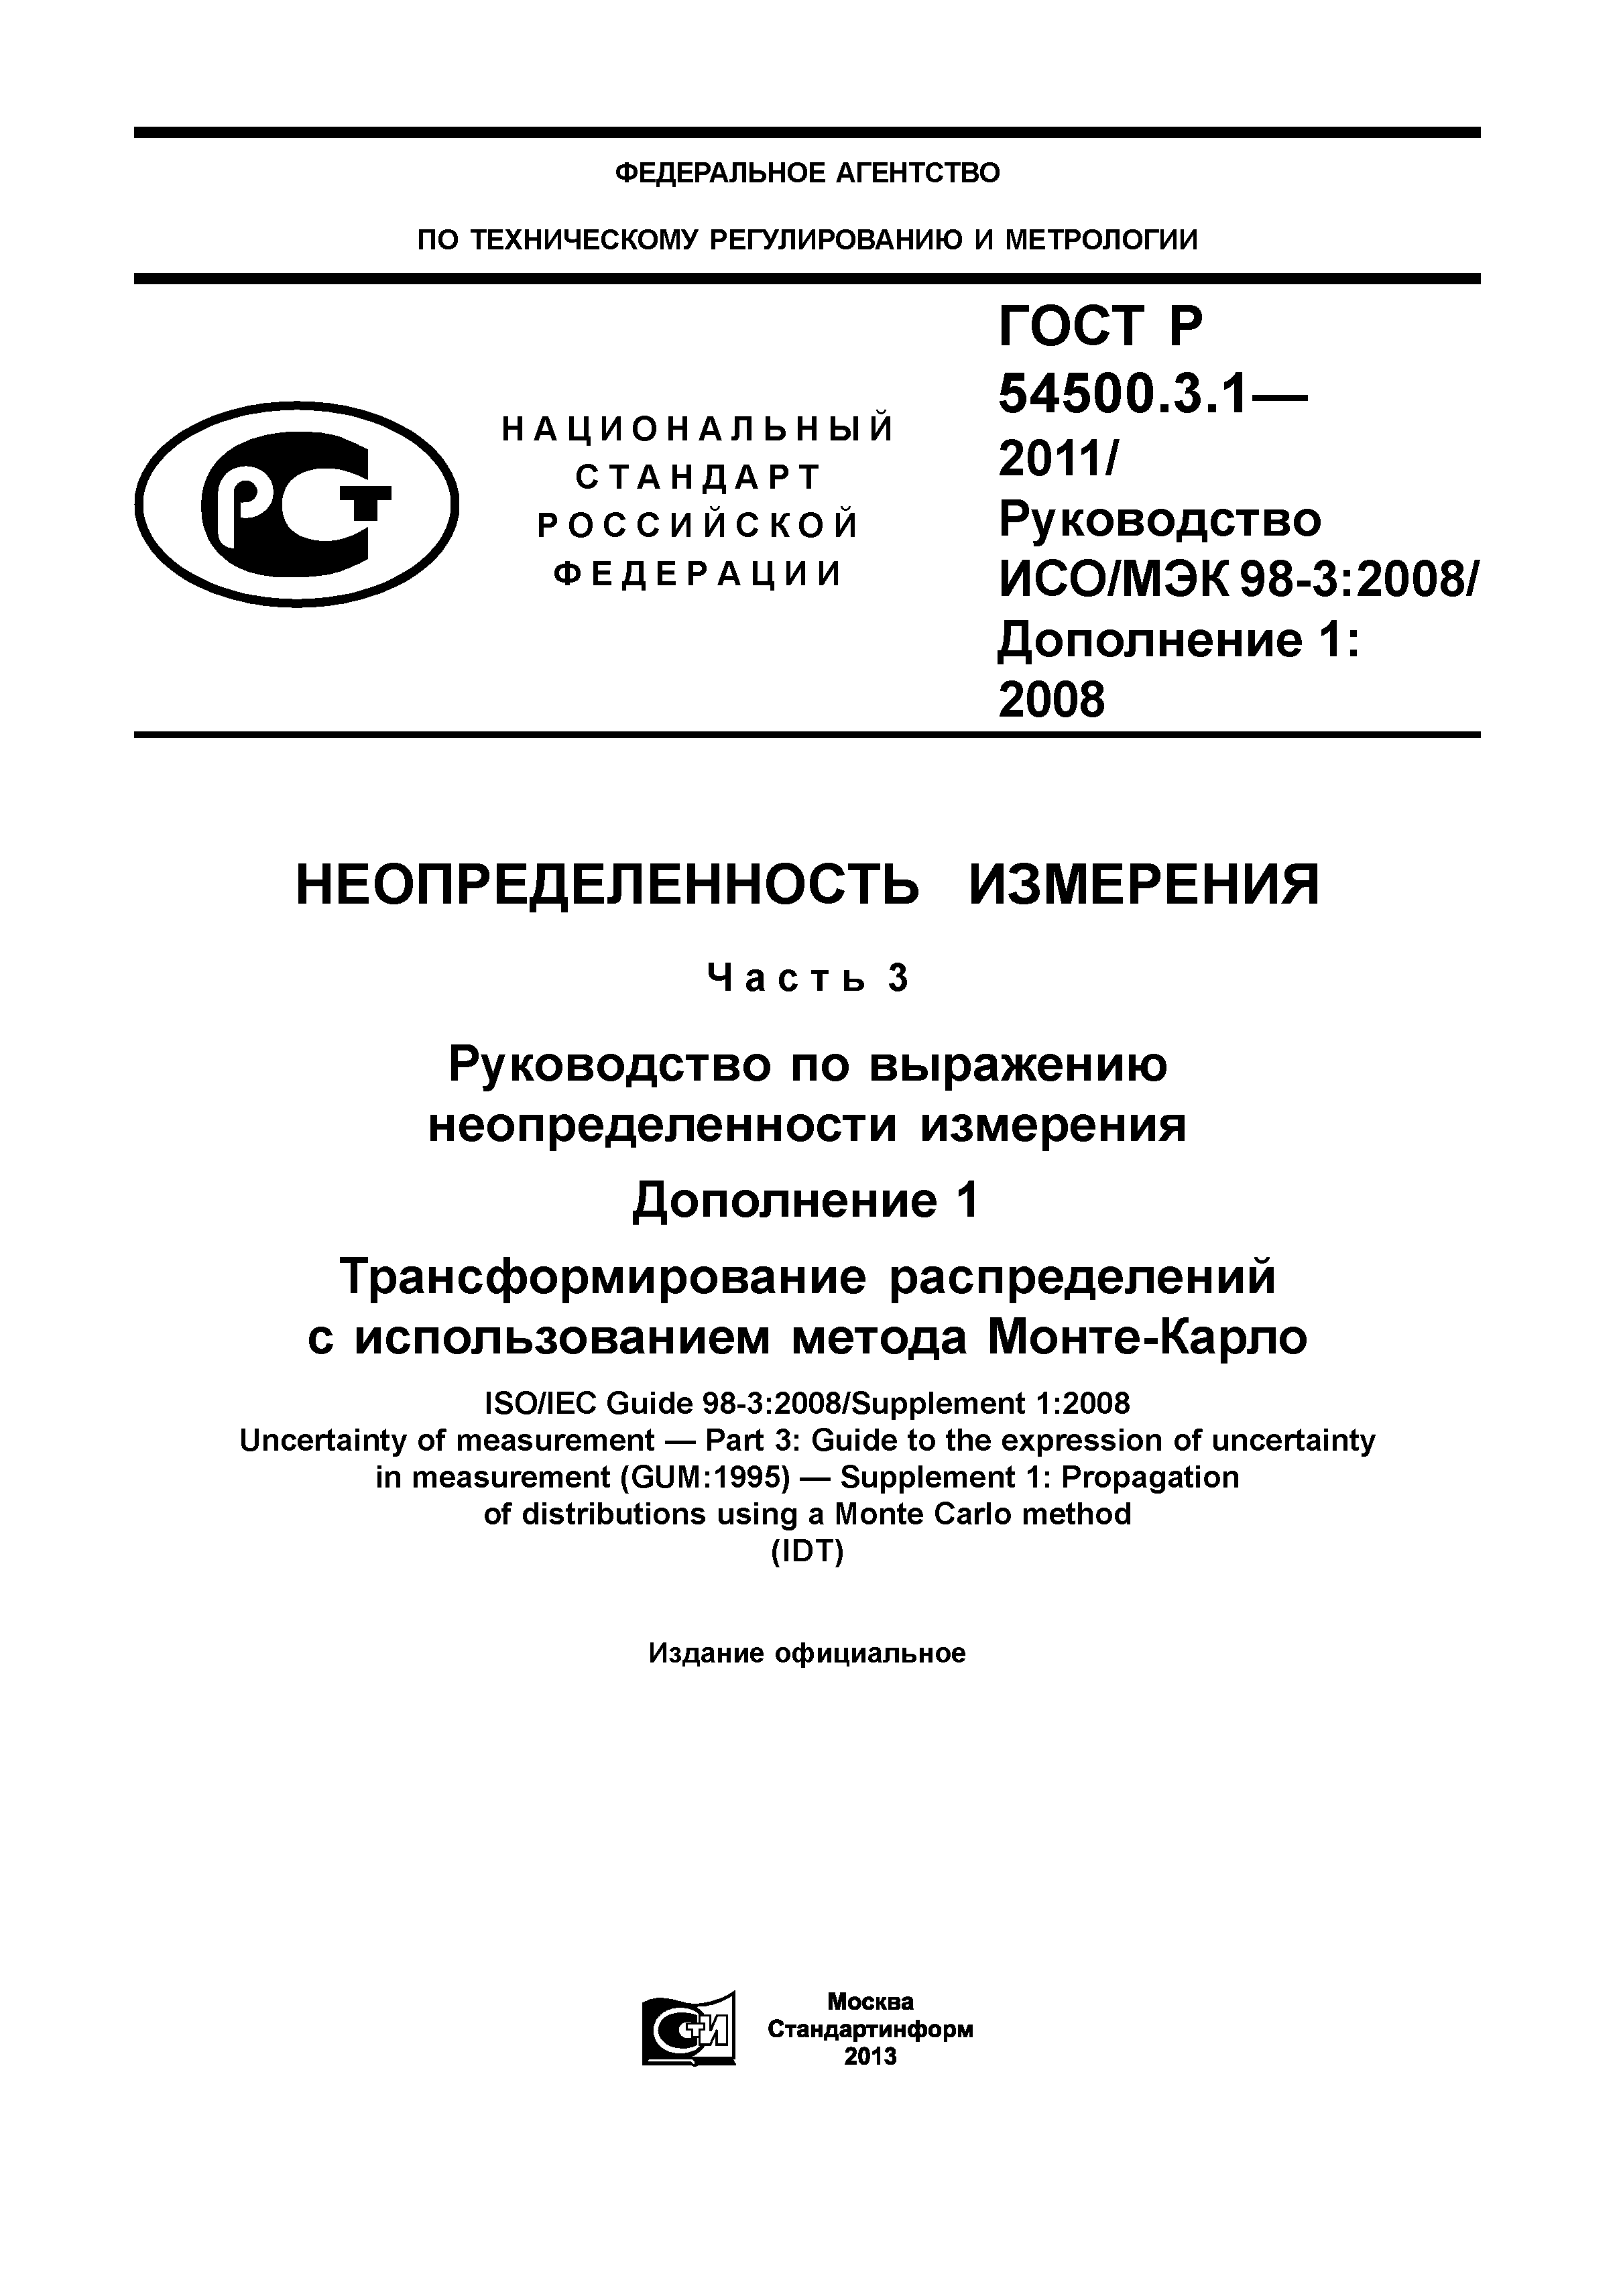 ГОСТ Р 54500.3.1-2011